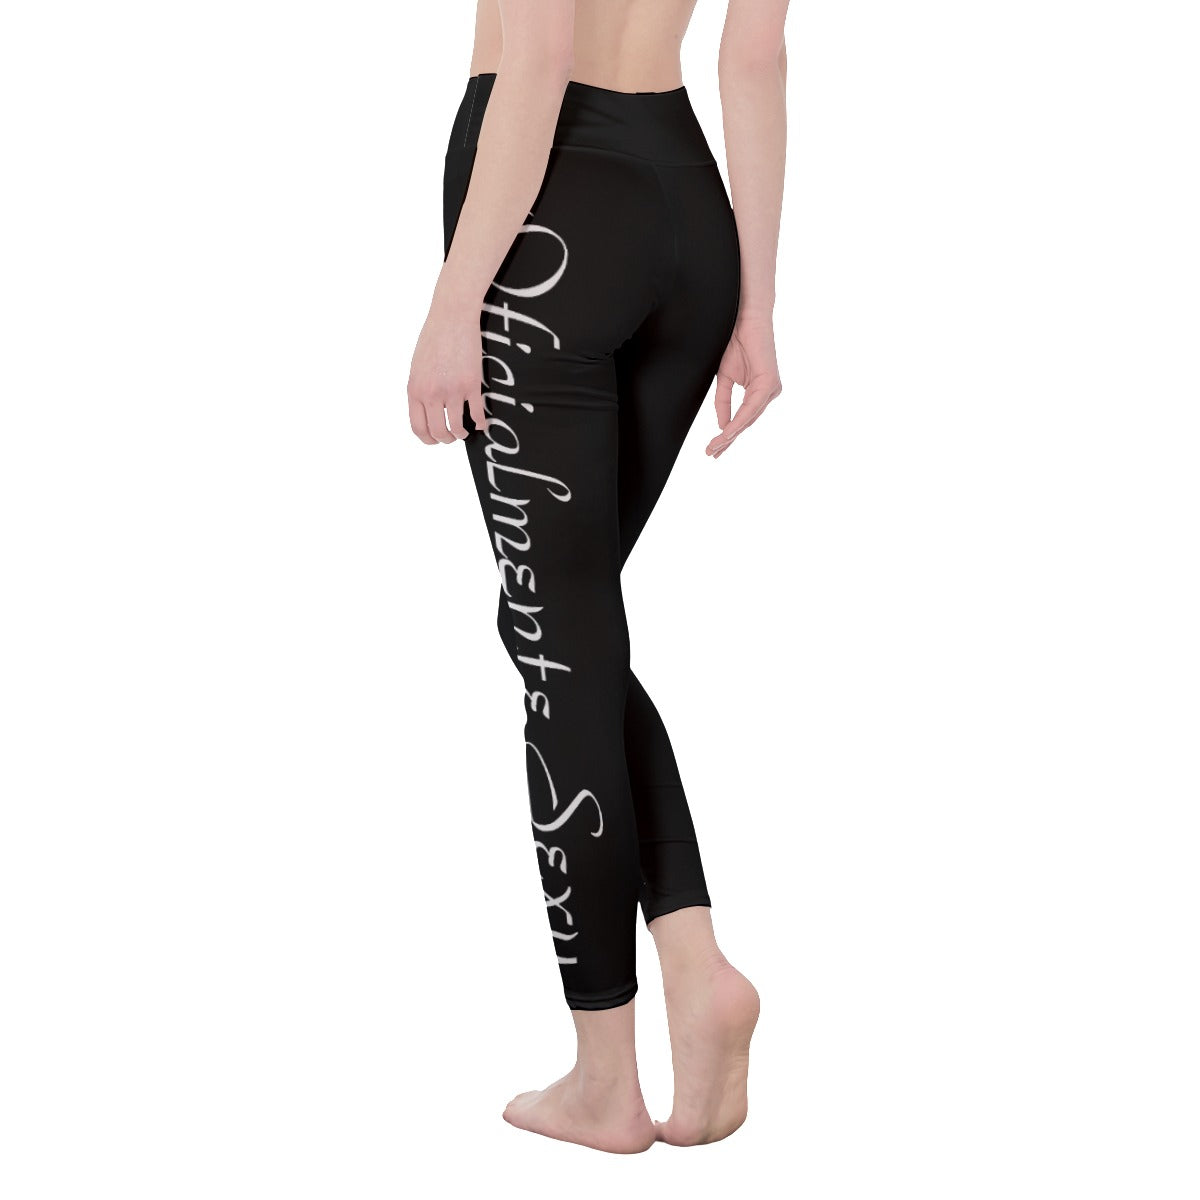 👖 Oficialmente Sexy Colors Collection Black With White Logo Women's High Waist Leggings Color #4A4A4A 👖